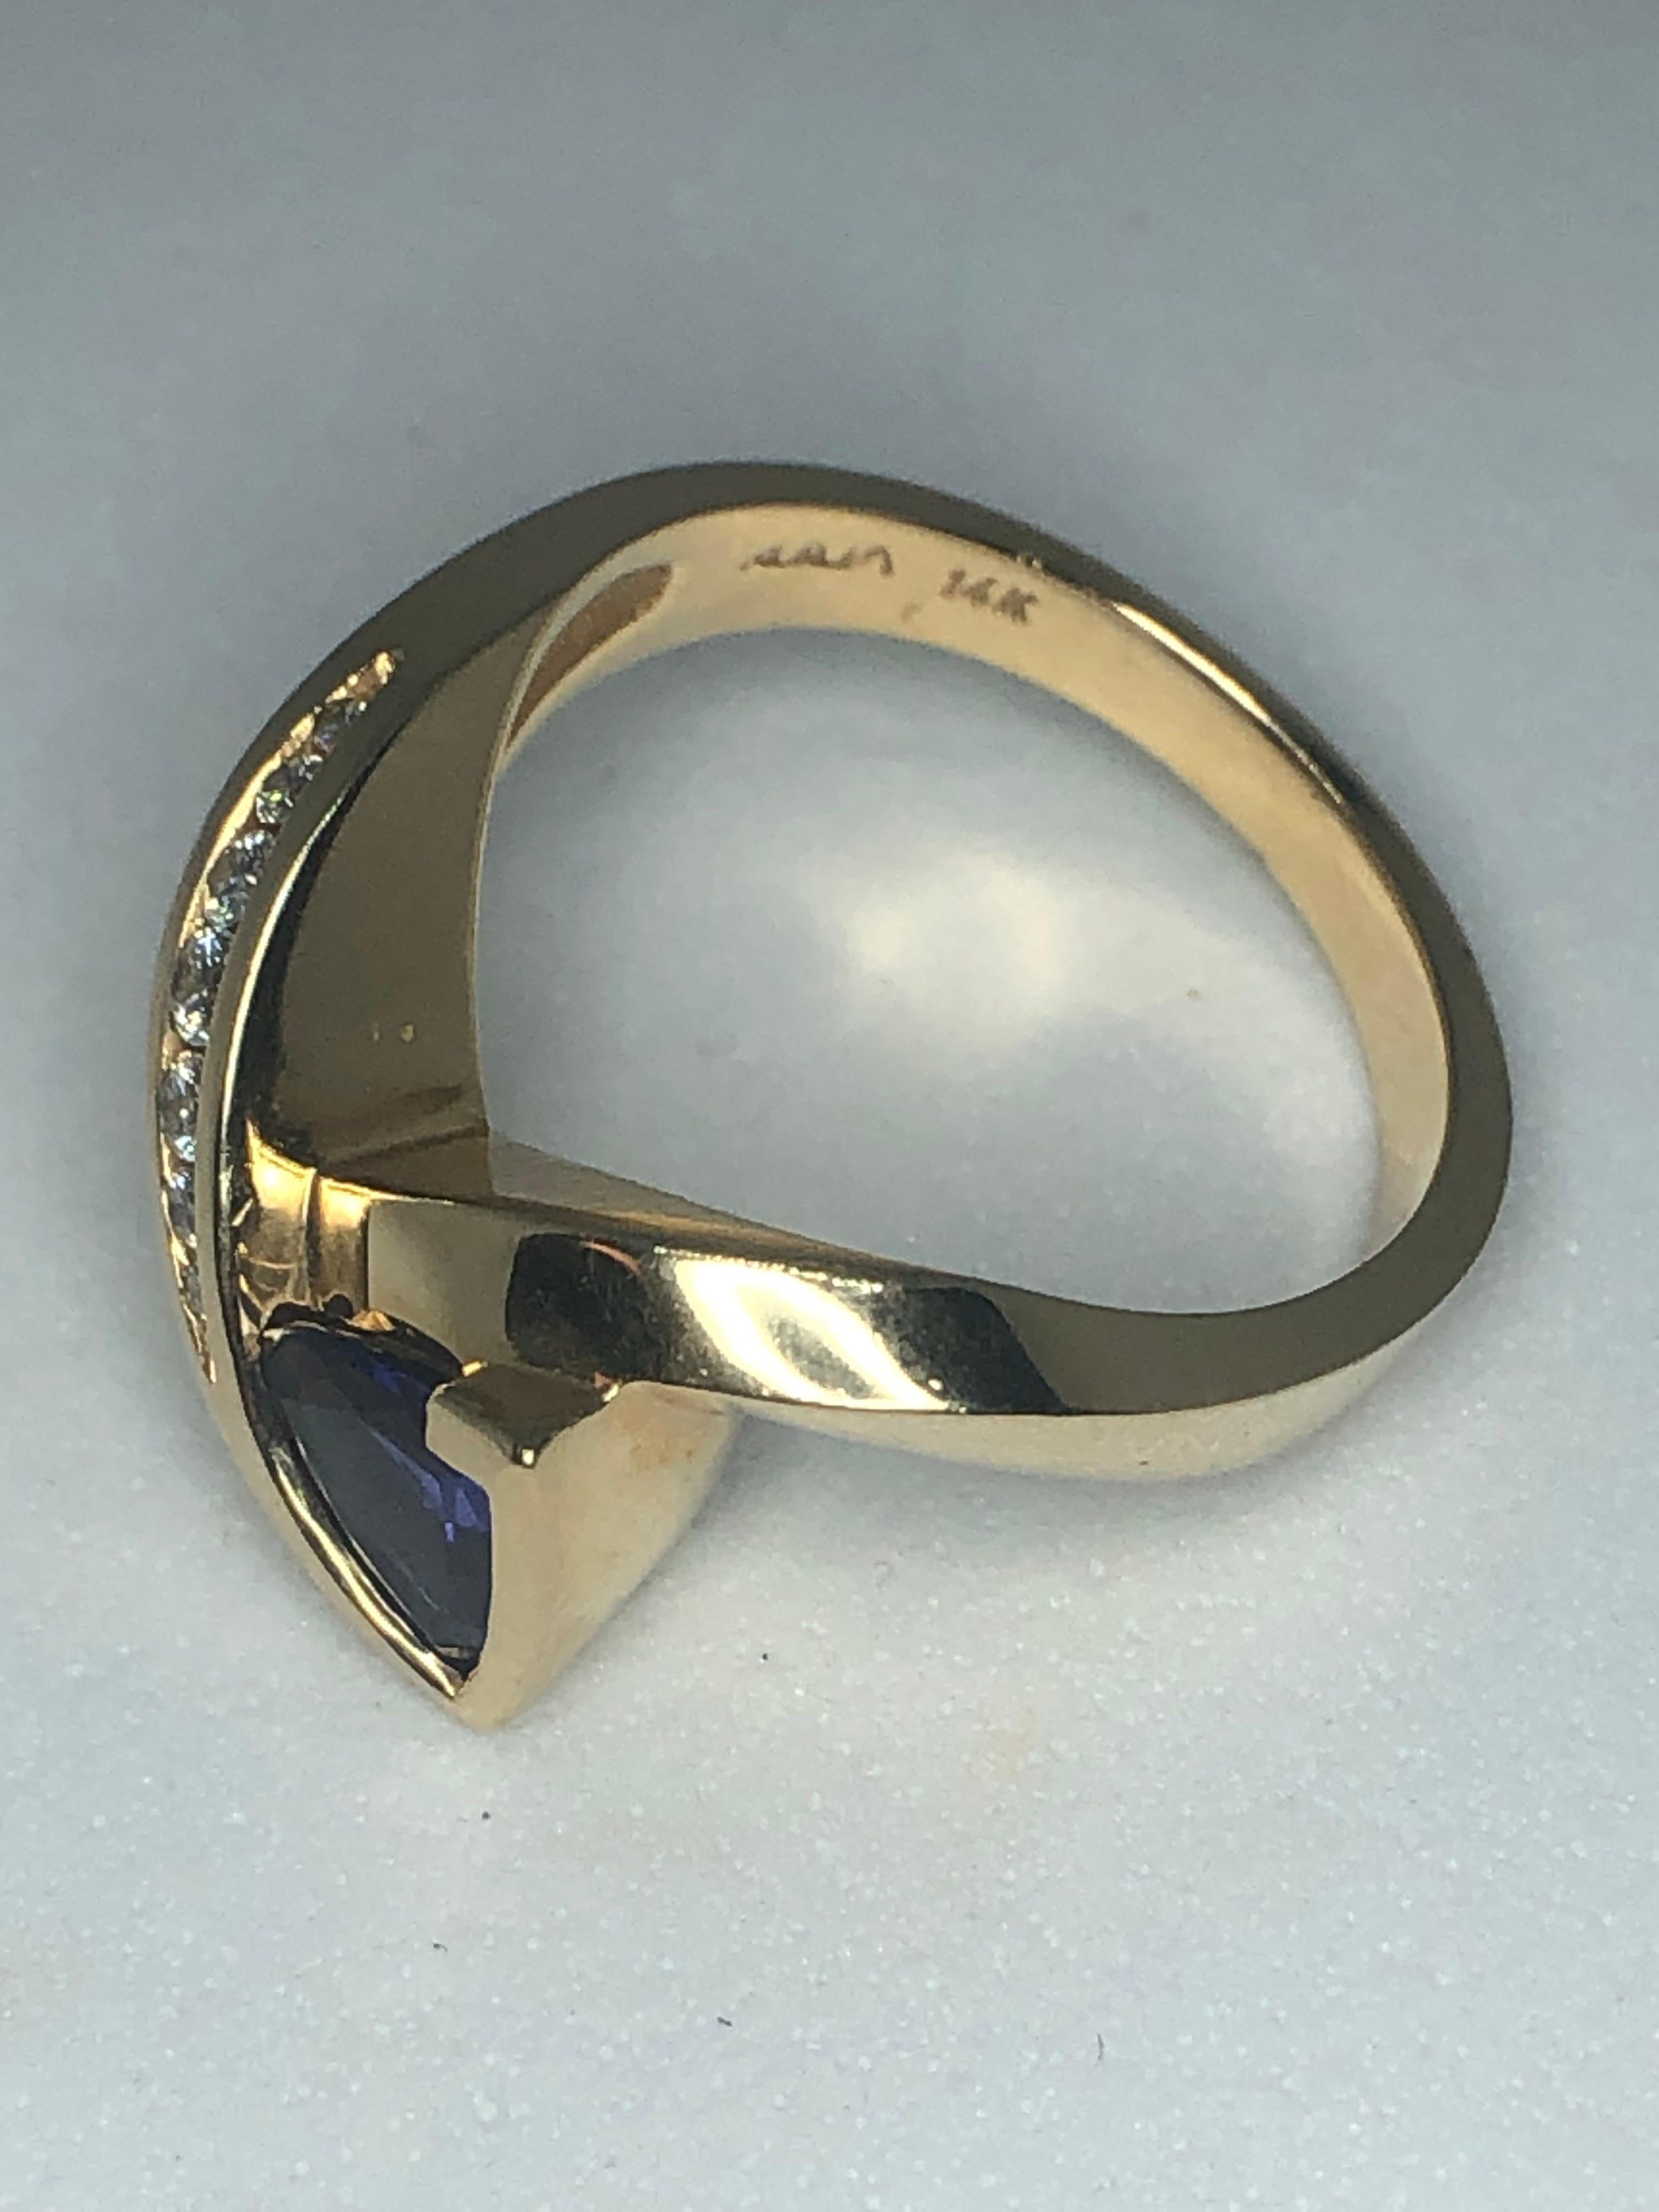 Lady's 14kt yellow gold tanzanite and diamond ring by Aurum, style # A-270, 1 - 6mm trillion shaped tanzanite = .75ct, medium purplish blue, full cut round diamonds = .14ct, average color G-H, average clarity VS2-SI1, 4.1dwt. Size 6